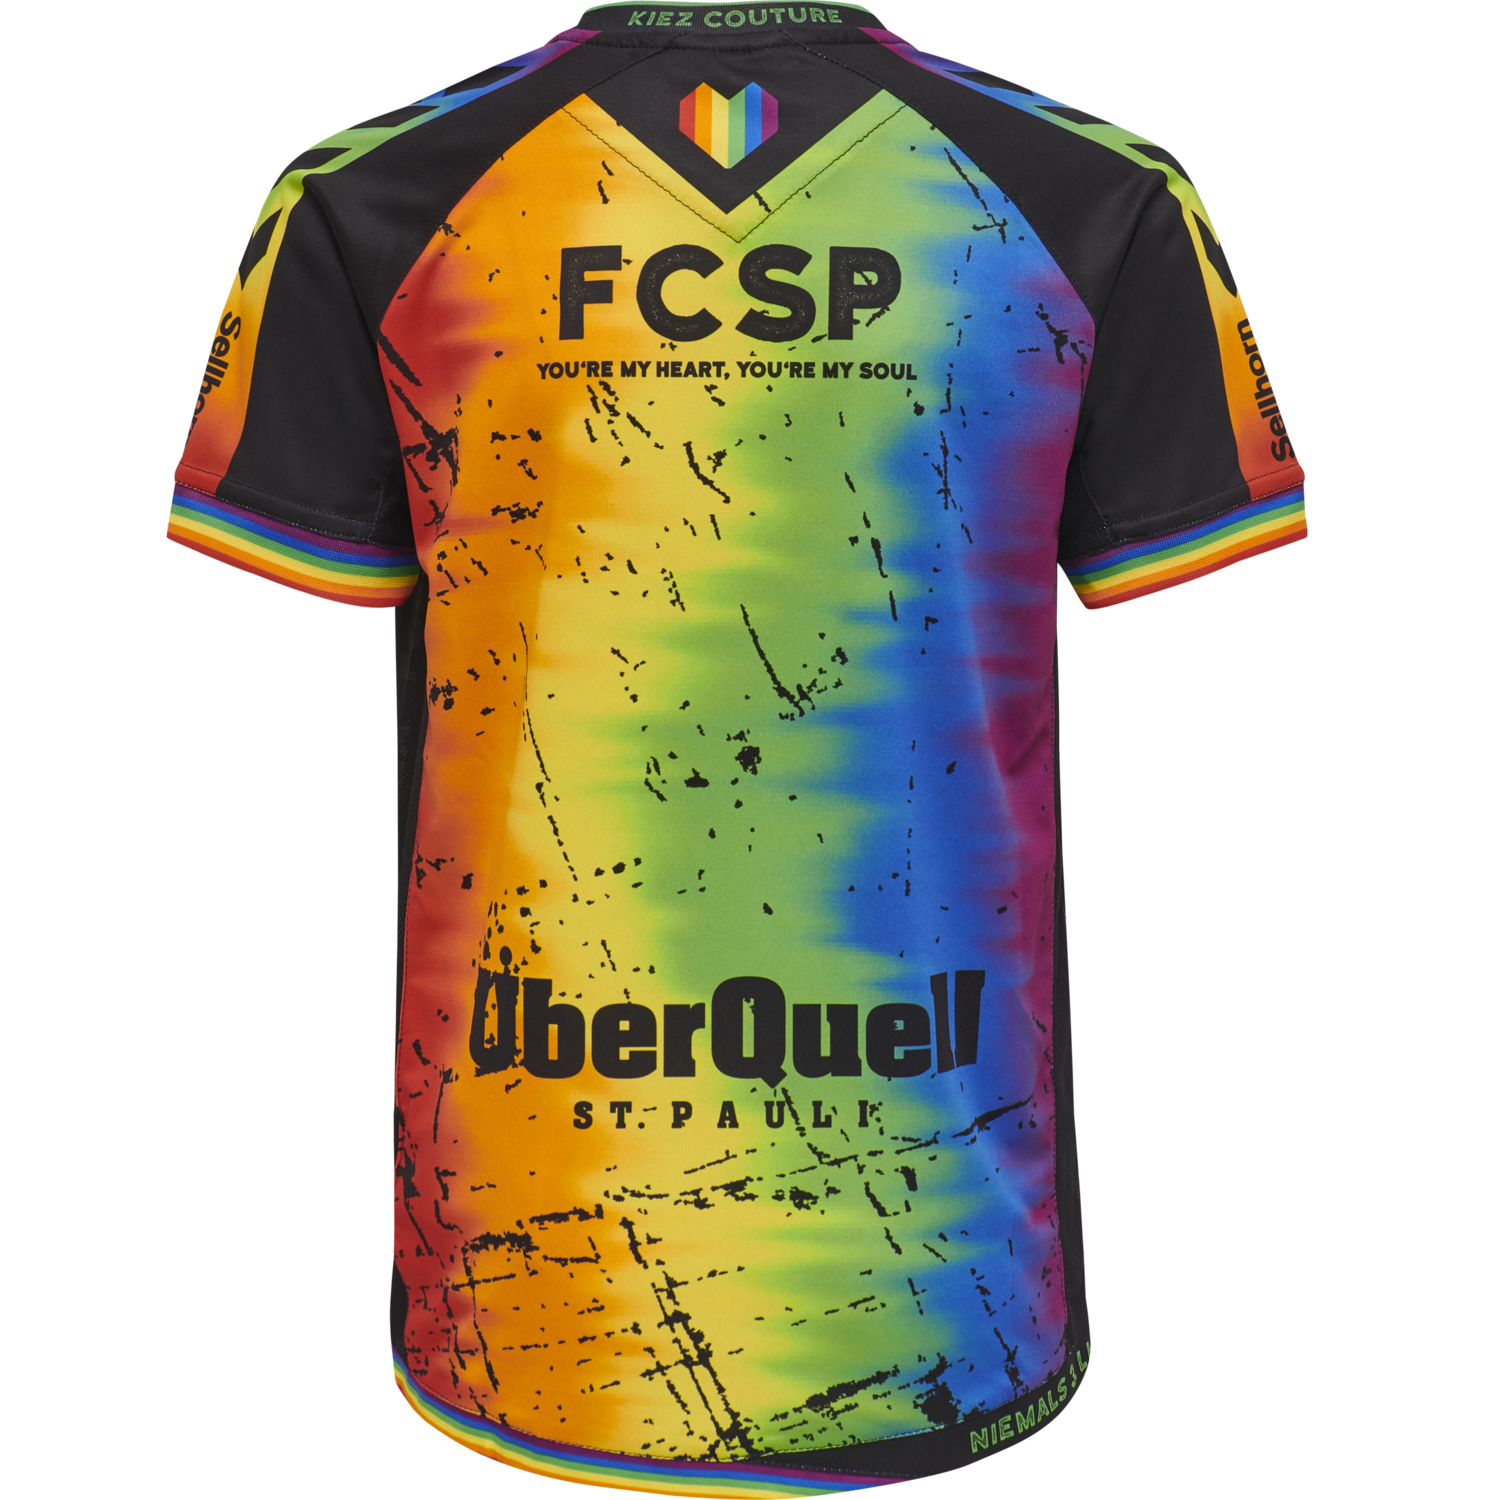 rainbow soccer jersey